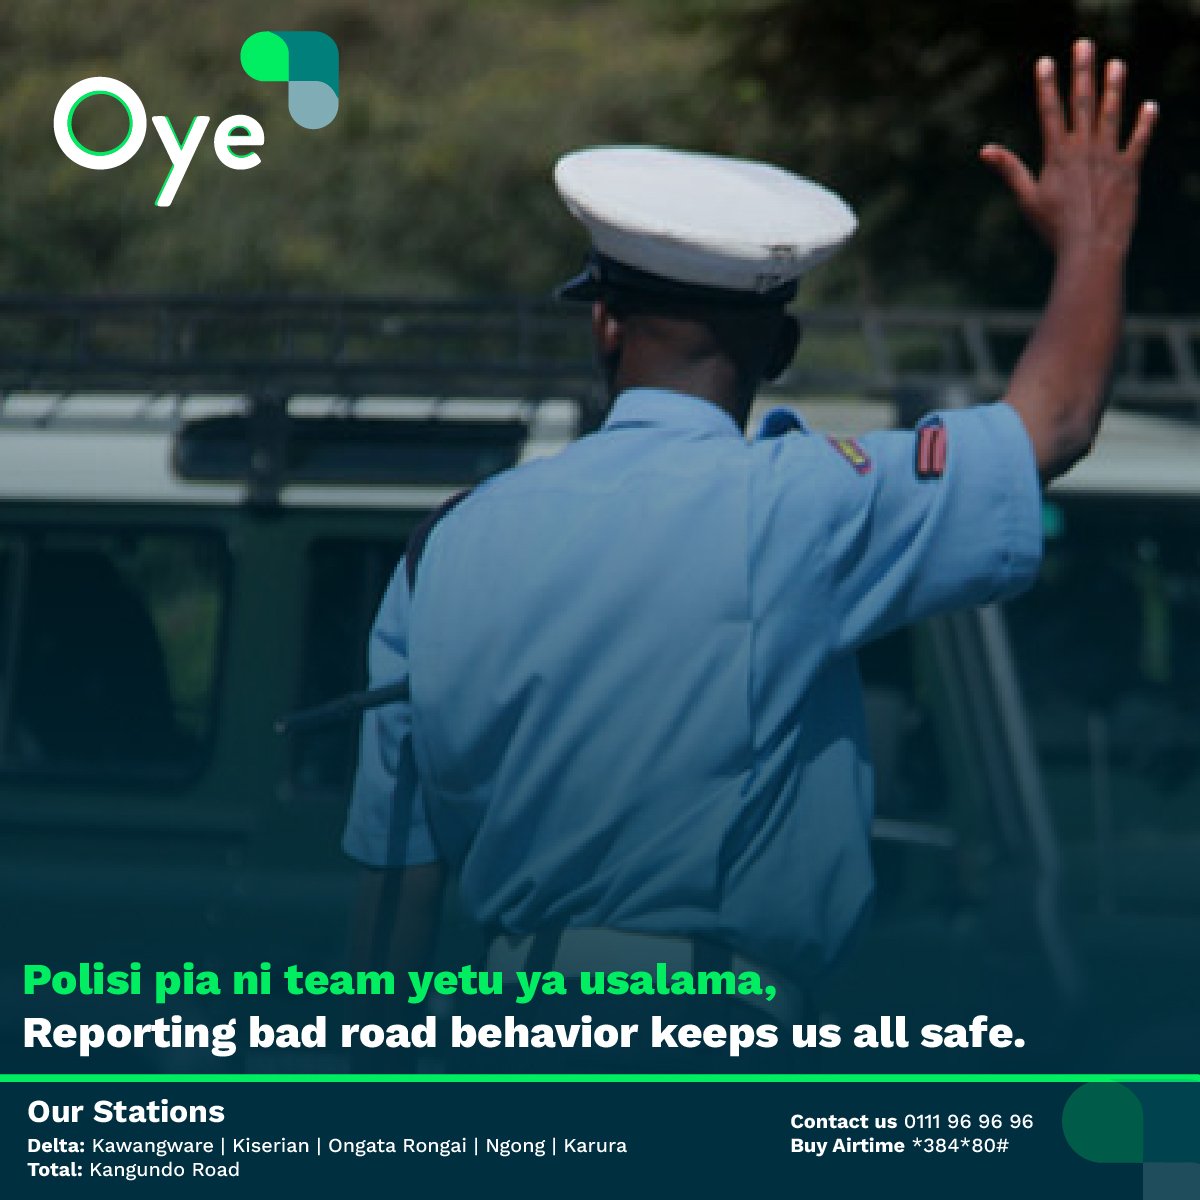 #Karao pia ni rafiki. Don't hesitate to report any reckless #drivers or suspicious behaviour on the #road to the authority.

#OYEKenya #MotorcycleSafetyAwareness 
#UNRoadSafetyWeek
#SaveALife  #NTSA
#UsalamaBarabarani @Bodaplus @ntsa_kenya @KevinMutiso @galanaenergies